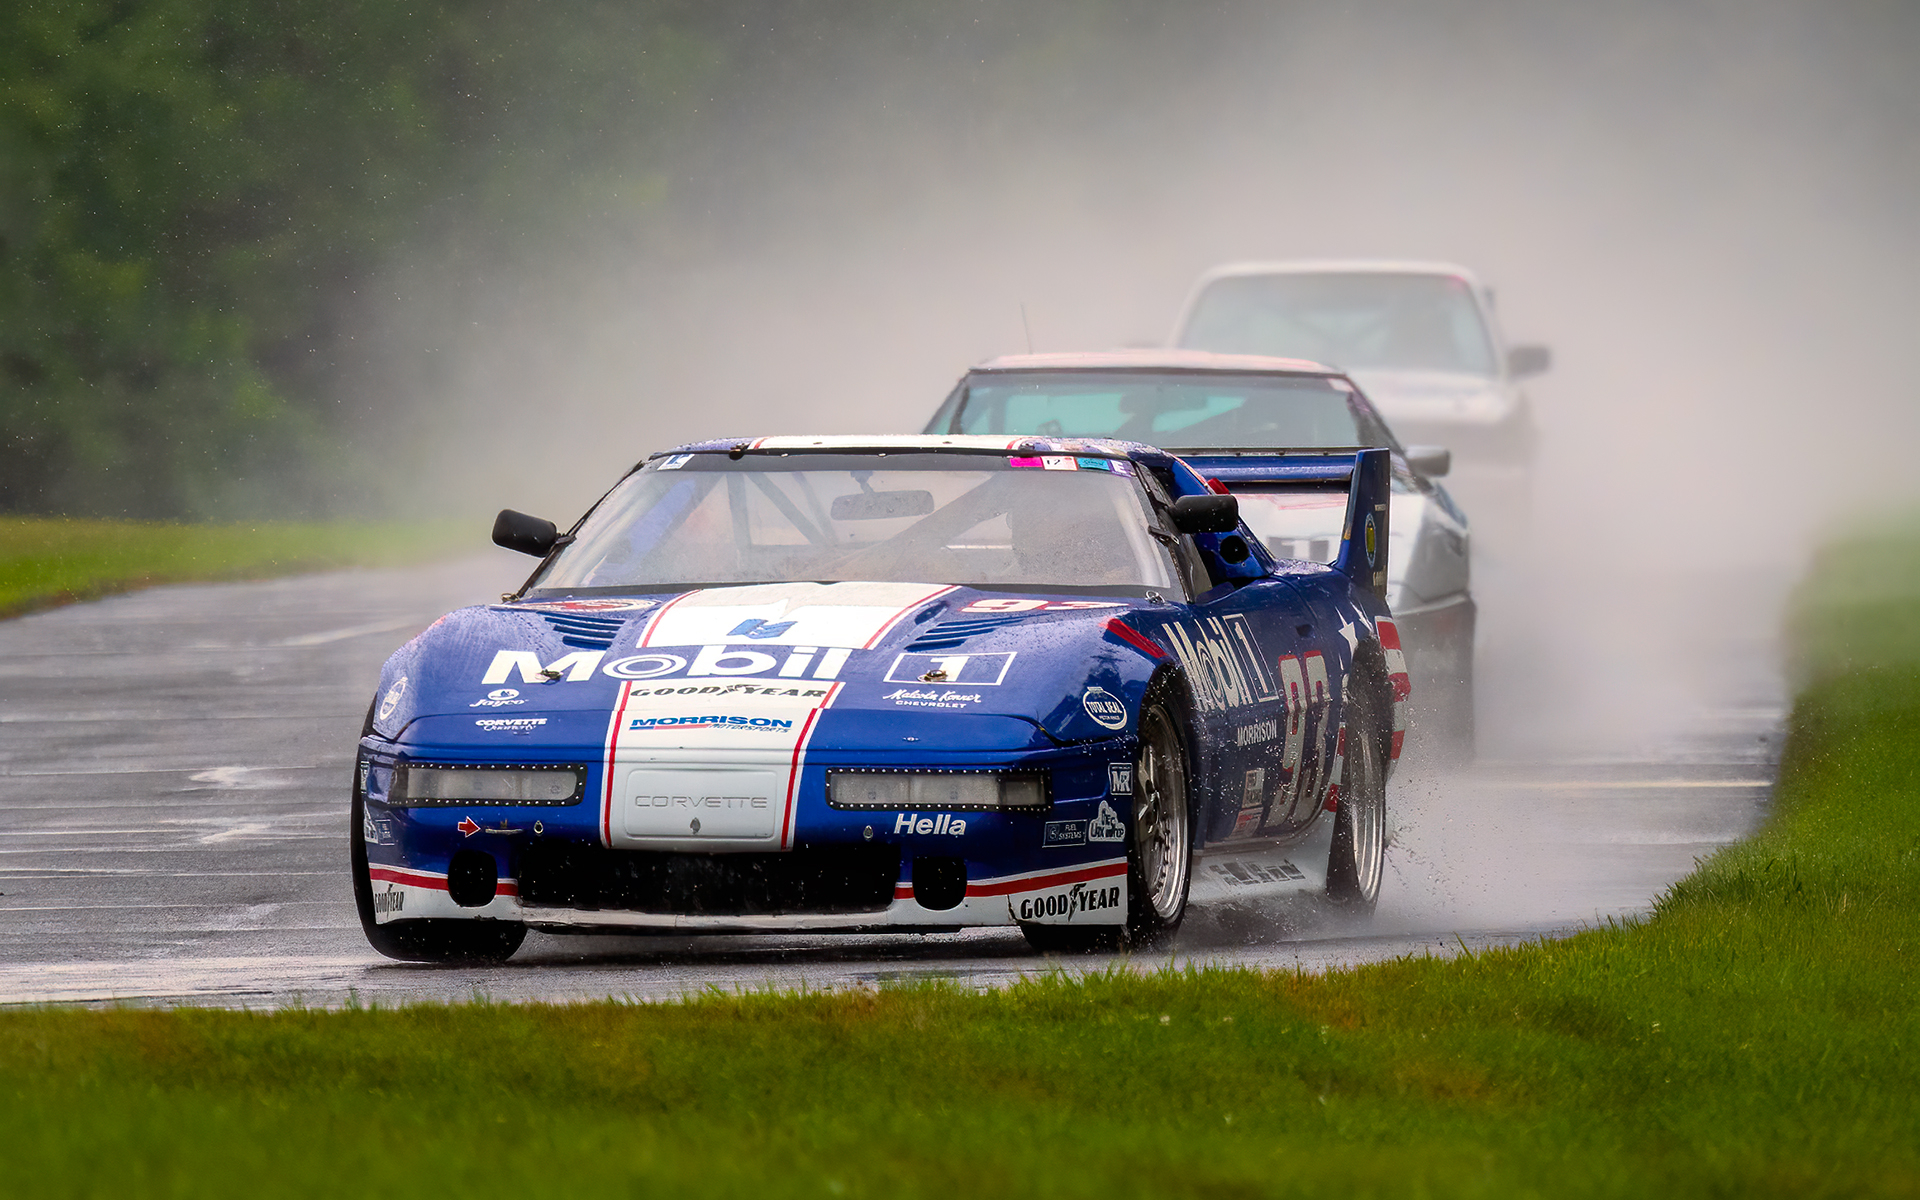 Chevrolet Corvette road racing during a rain storm at Waterford Hills, Michigan : Cars : Dan Sheehan Photographs - Fine Art Stock Photography